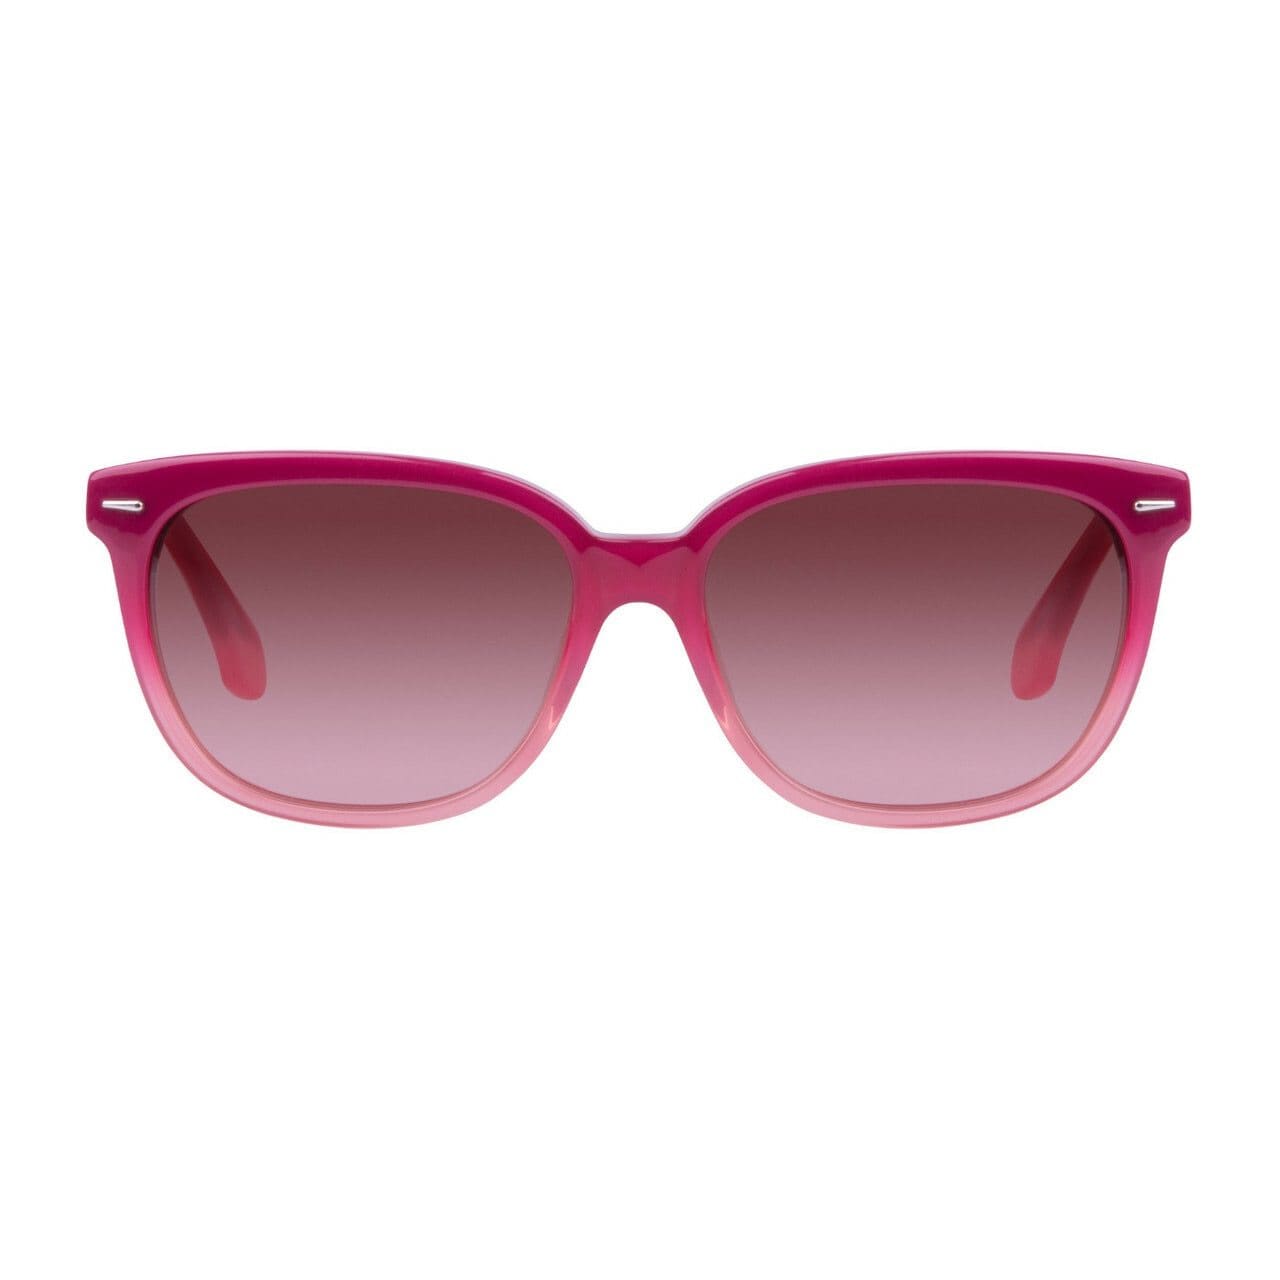 Calvin Klein CK4215S-234 Strawberry Tone Women's Sunglasses Frames 750779068076